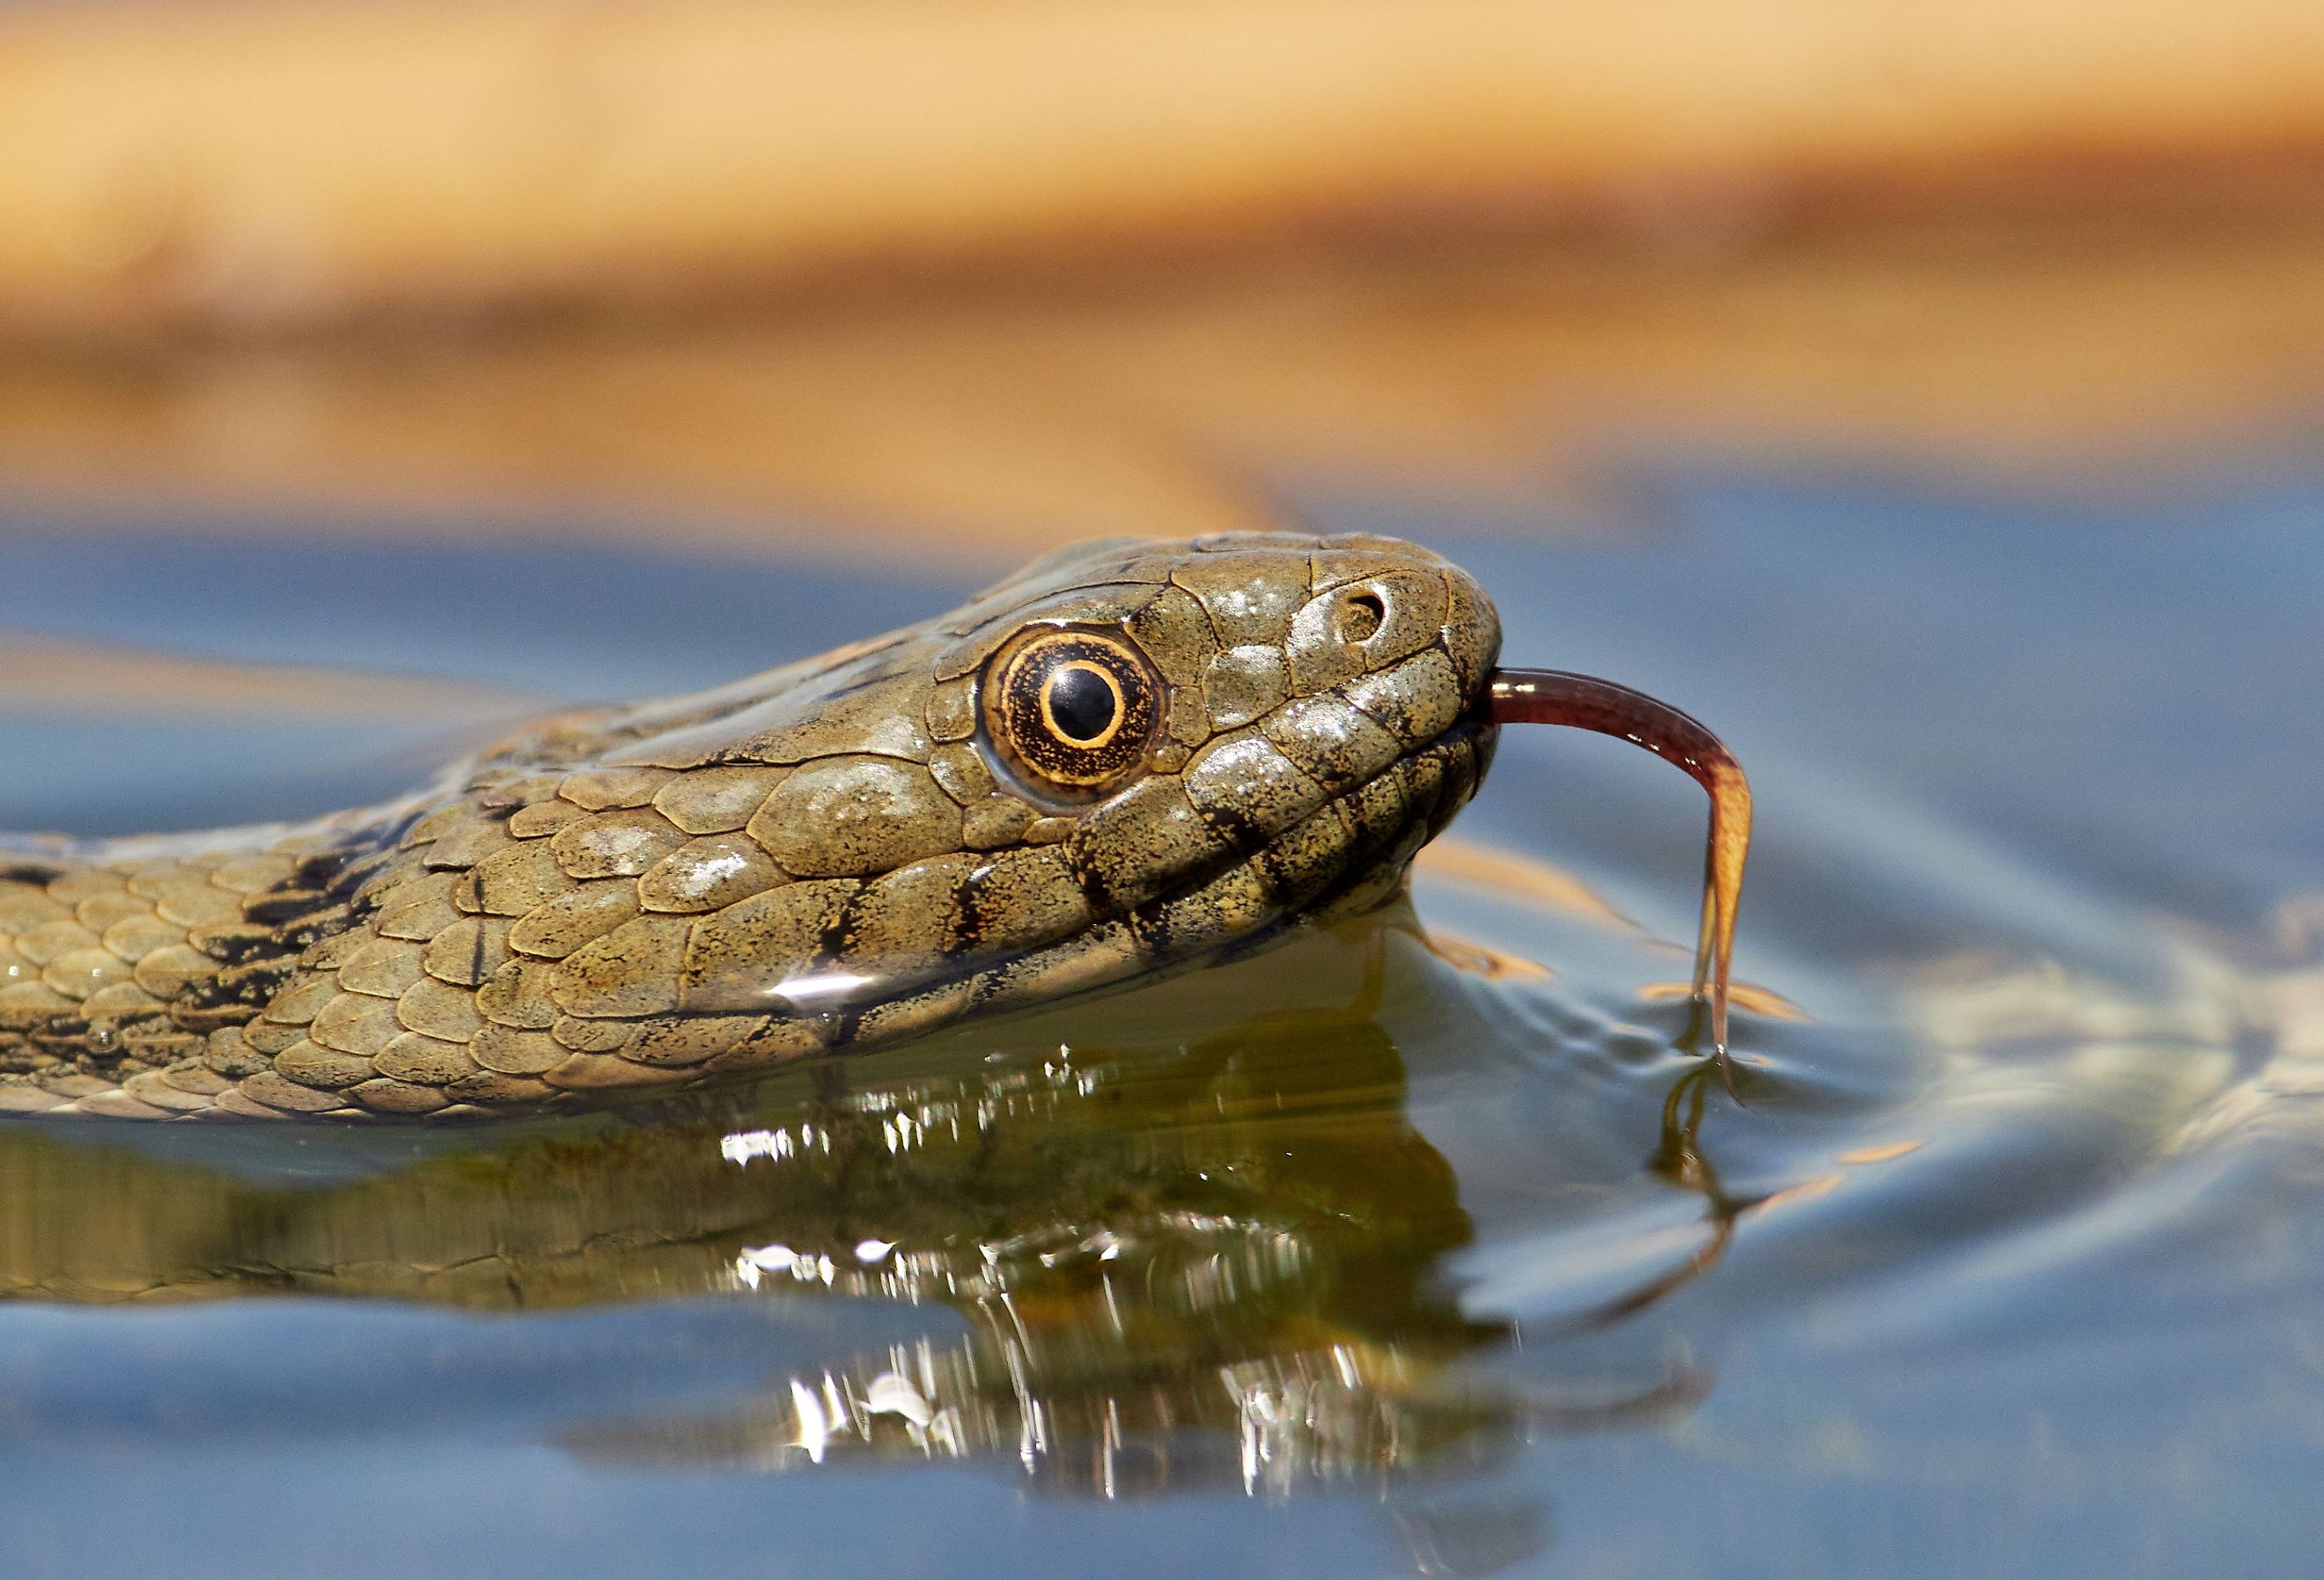 Dice snake in the water. Image credit aaltair via shutterstock